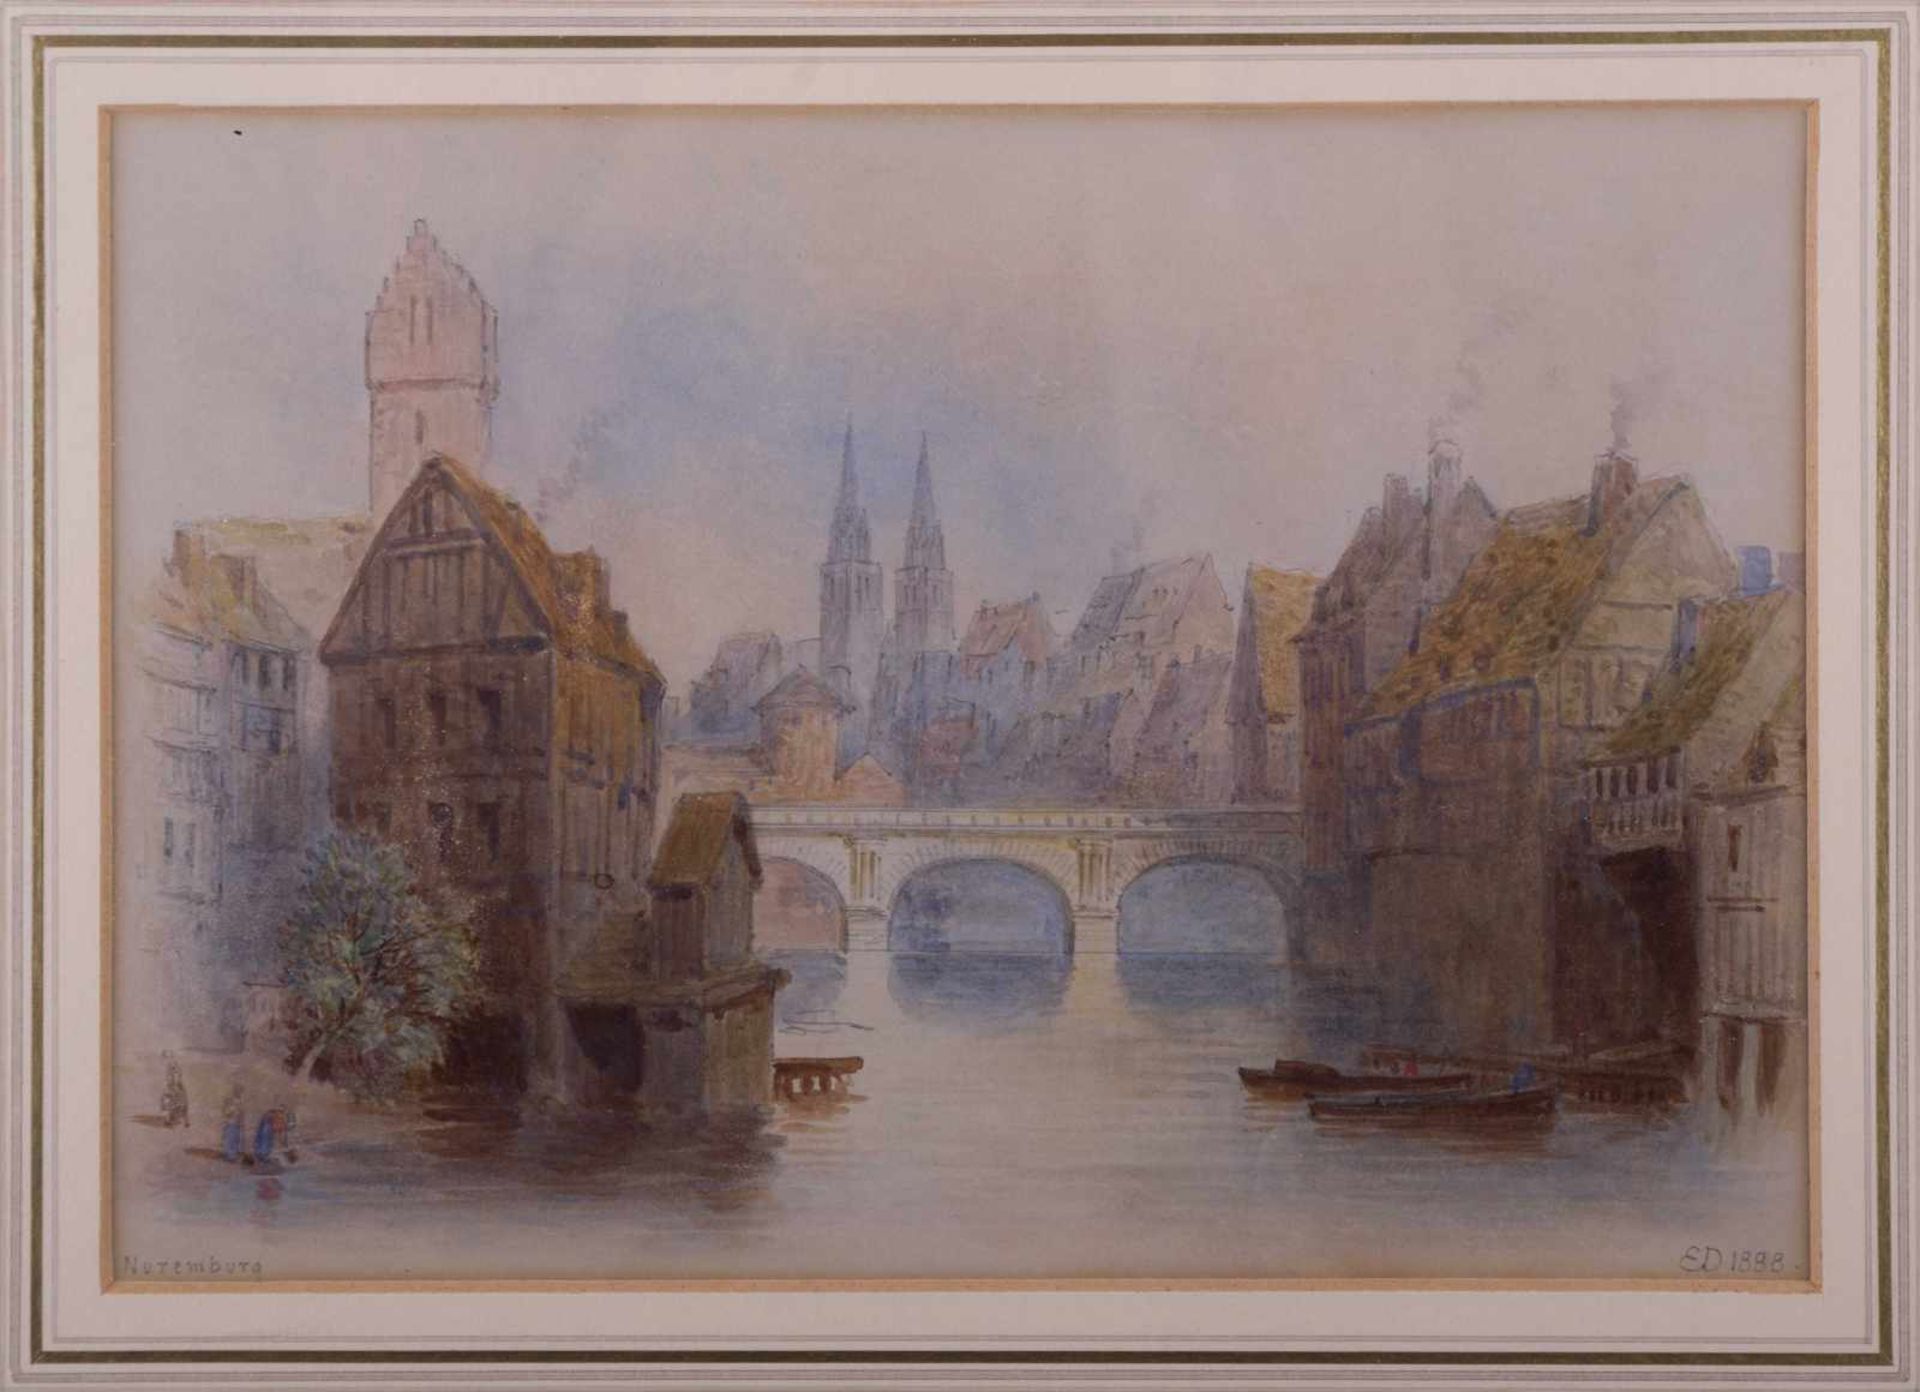 Edwin Thomas DOLBY (act.1849-1895) "Nürnberg" Zeichnung-Aquarell, 17 cm x 23 cm, rechts unten